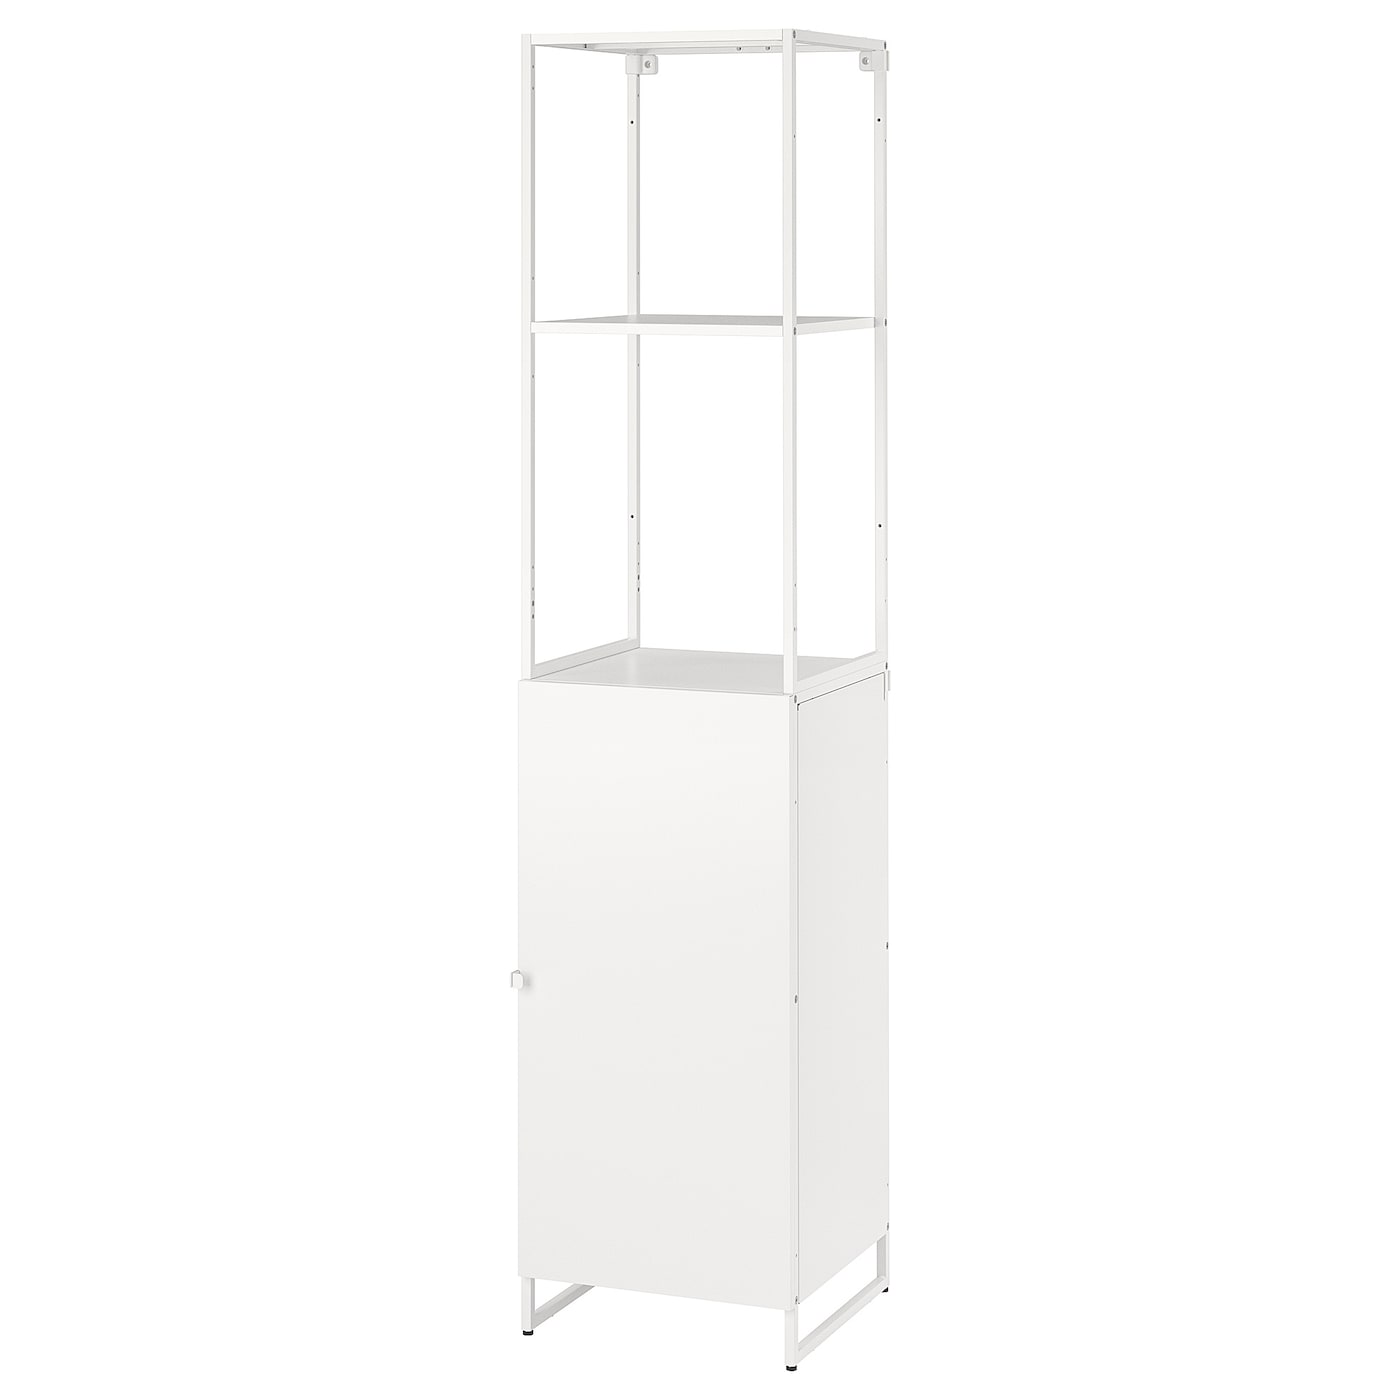 Книжный шкаф - JOSTEIN IKEA/ ЙОСТЕЙН ИКЕА,  180х41 см, белый